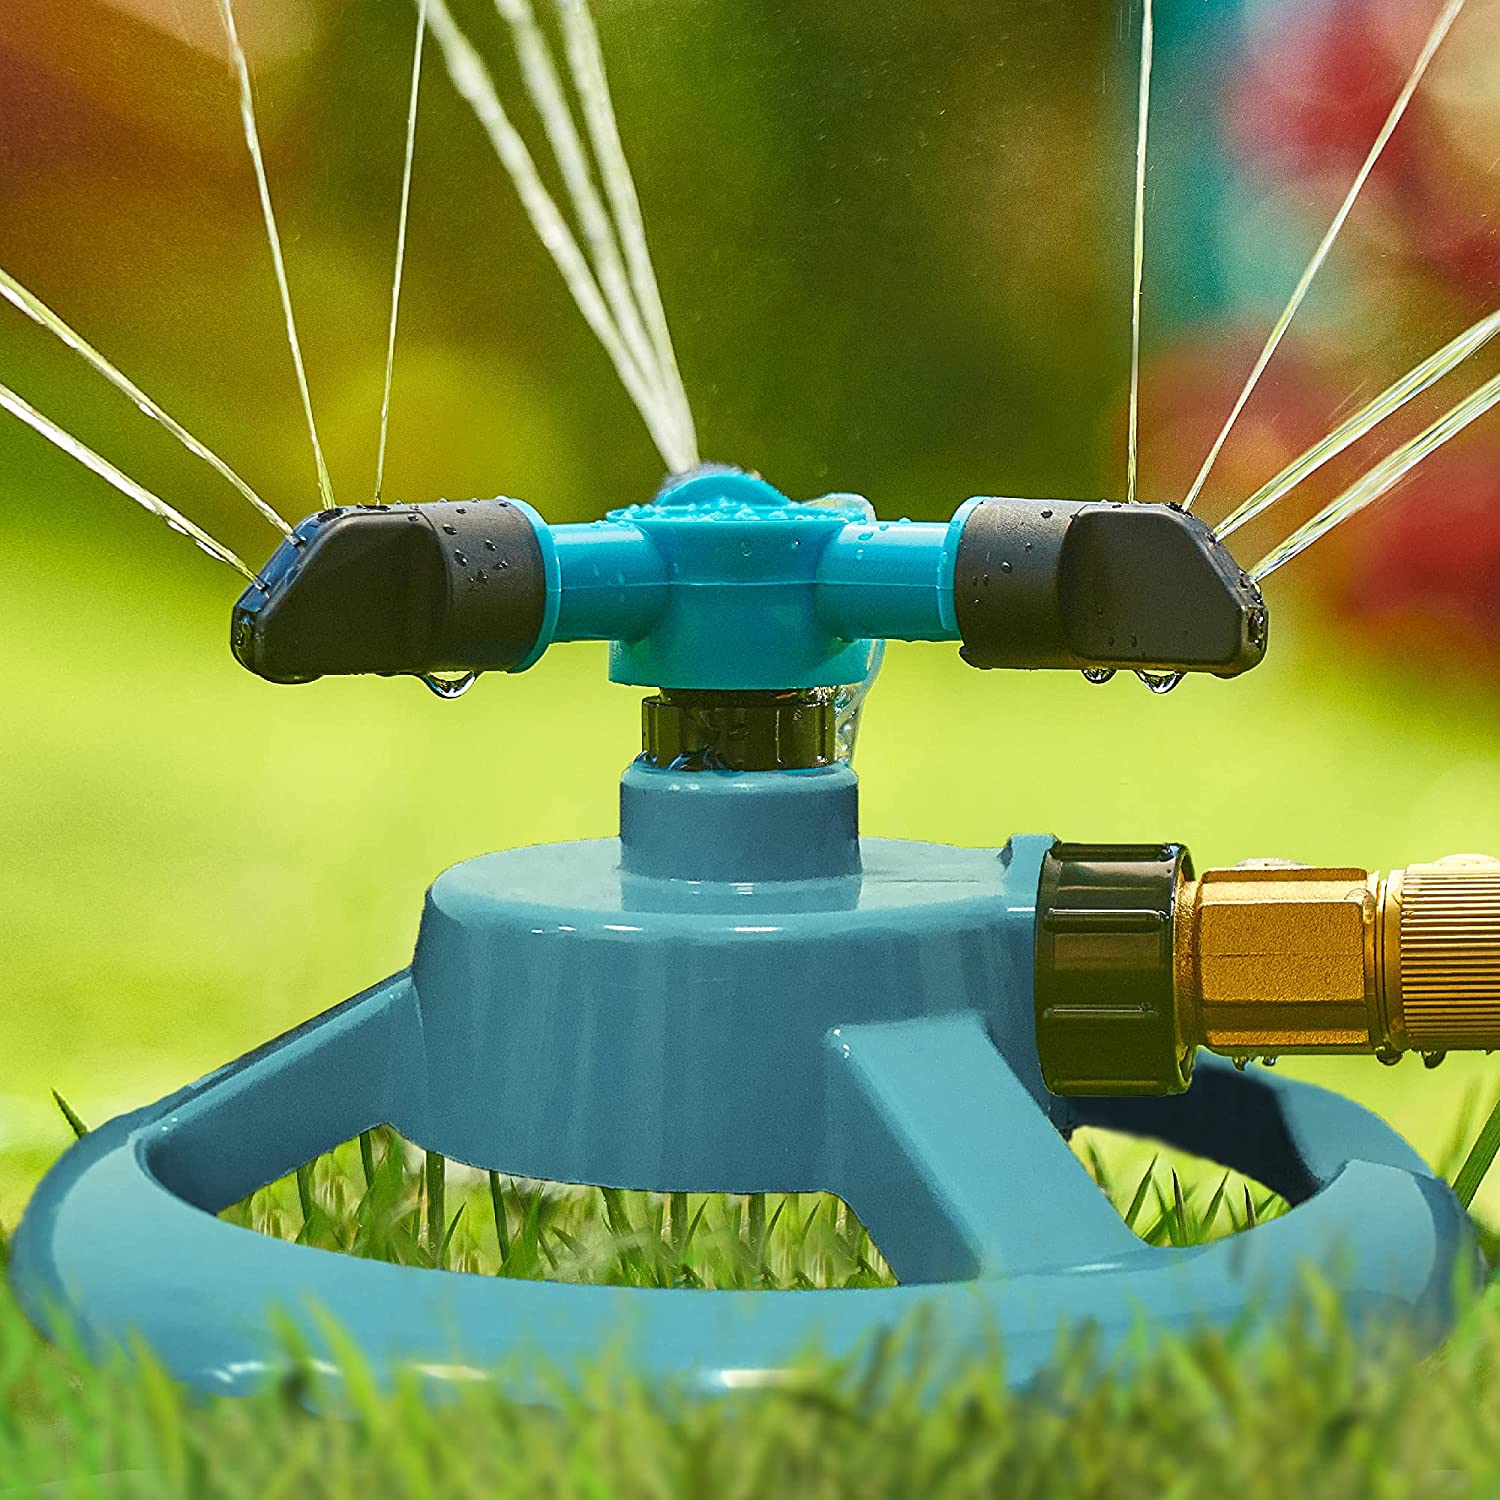 Trazon Rotating 360-Degree Lawn Sprinkler